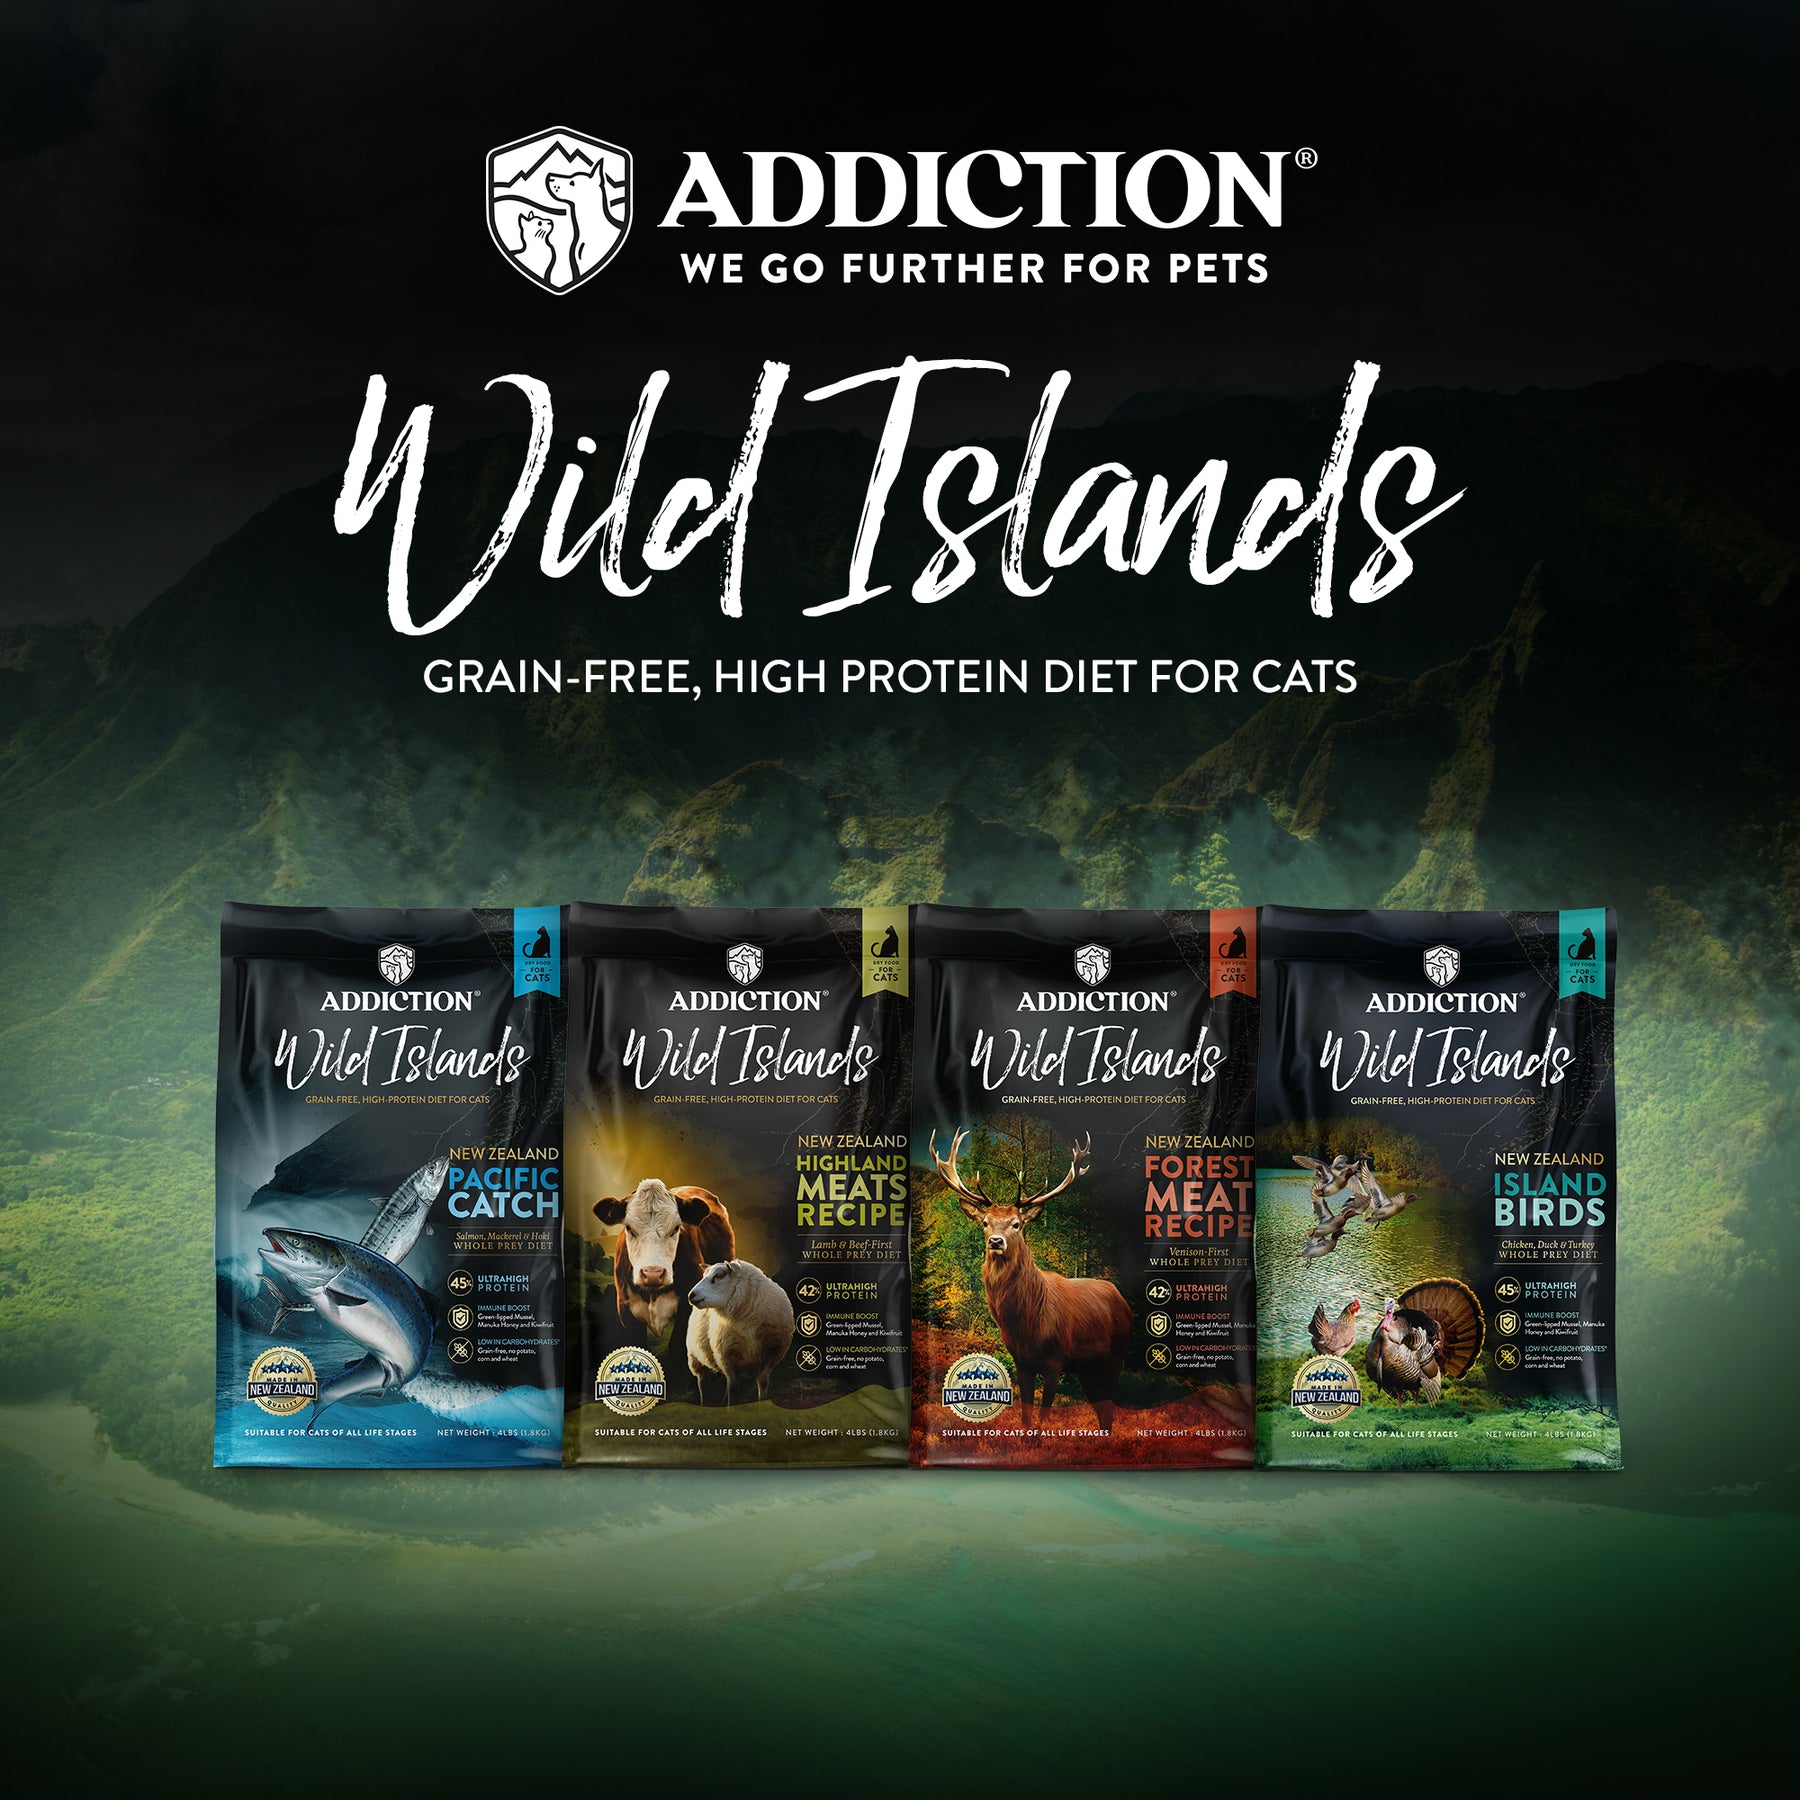 Addiction Wild Islands Cat Pacific Catch